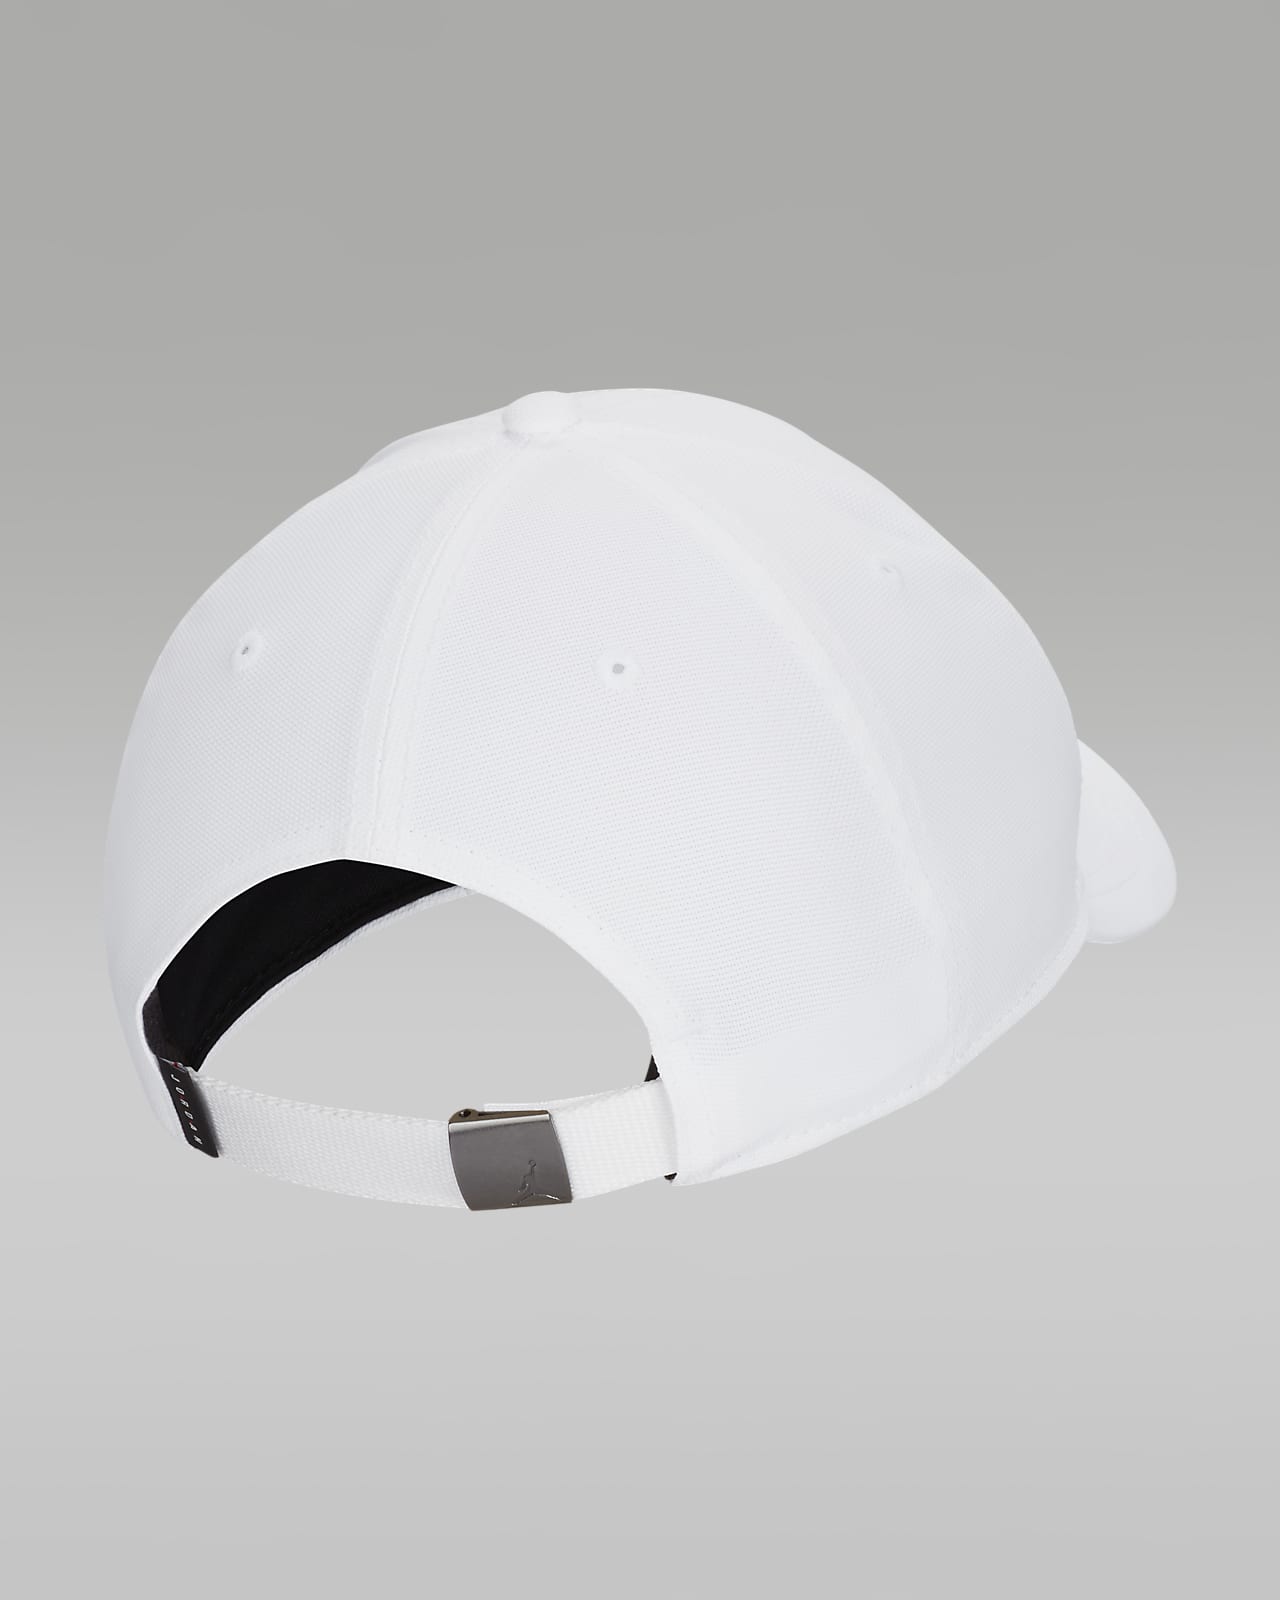 ECCO World Class Red Golf Hat Cap Strap Back Adjustable White Logo